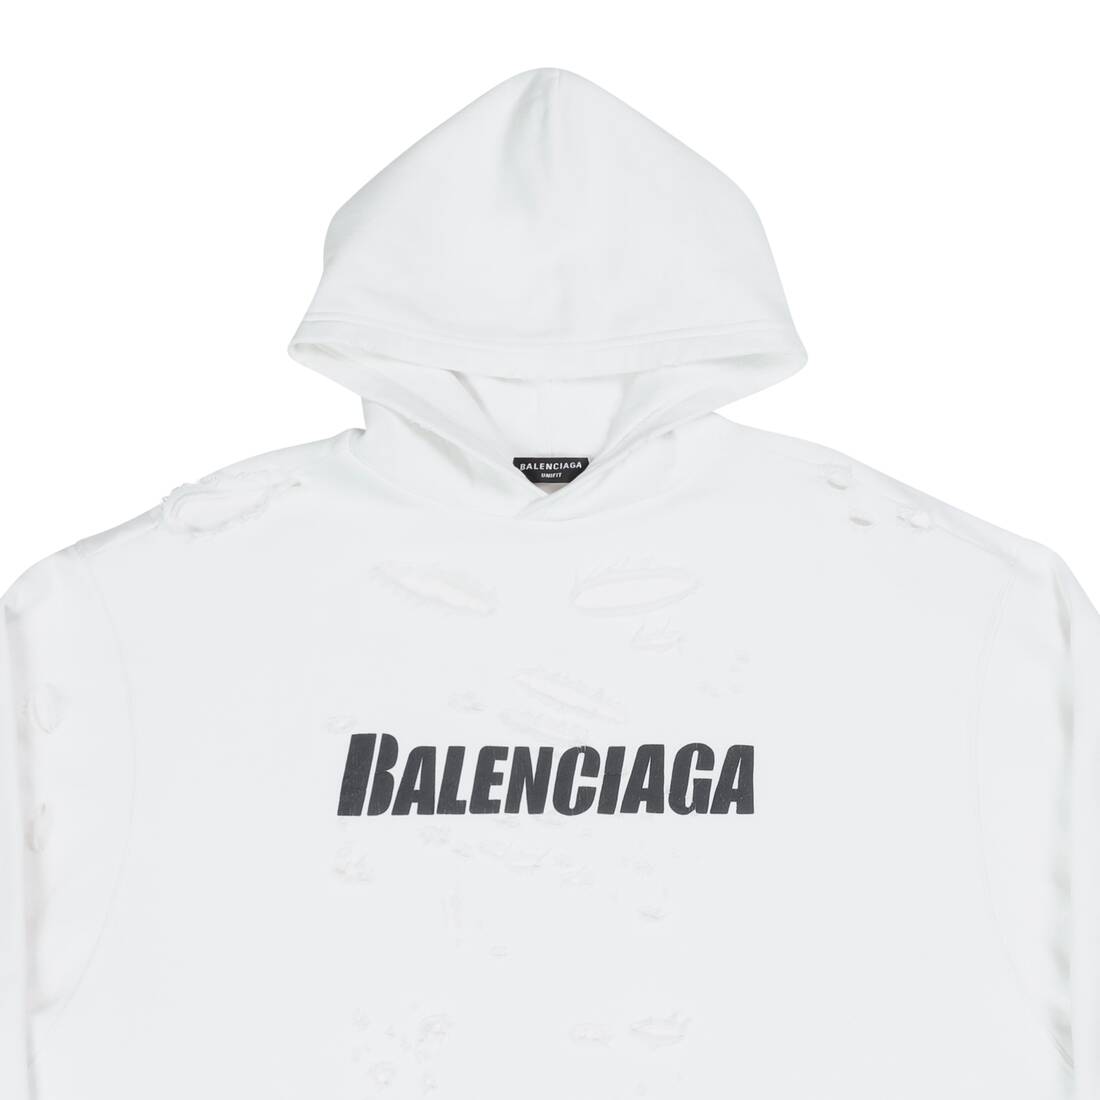 Balenciaga sweatshirt hoodies white  Roupas caras Roupas Moletons